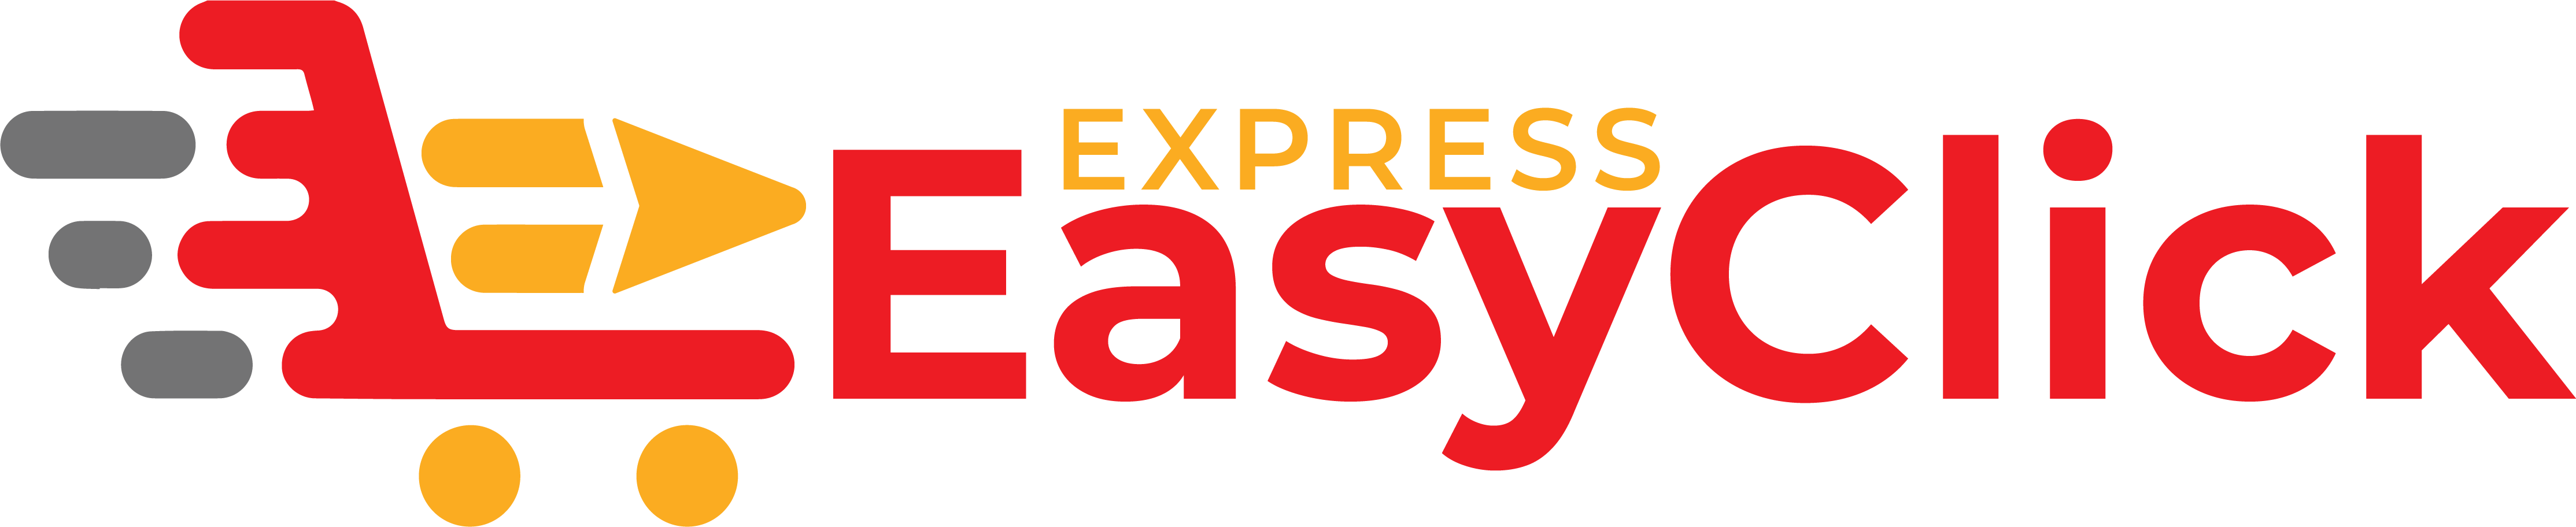 Easy Click Express